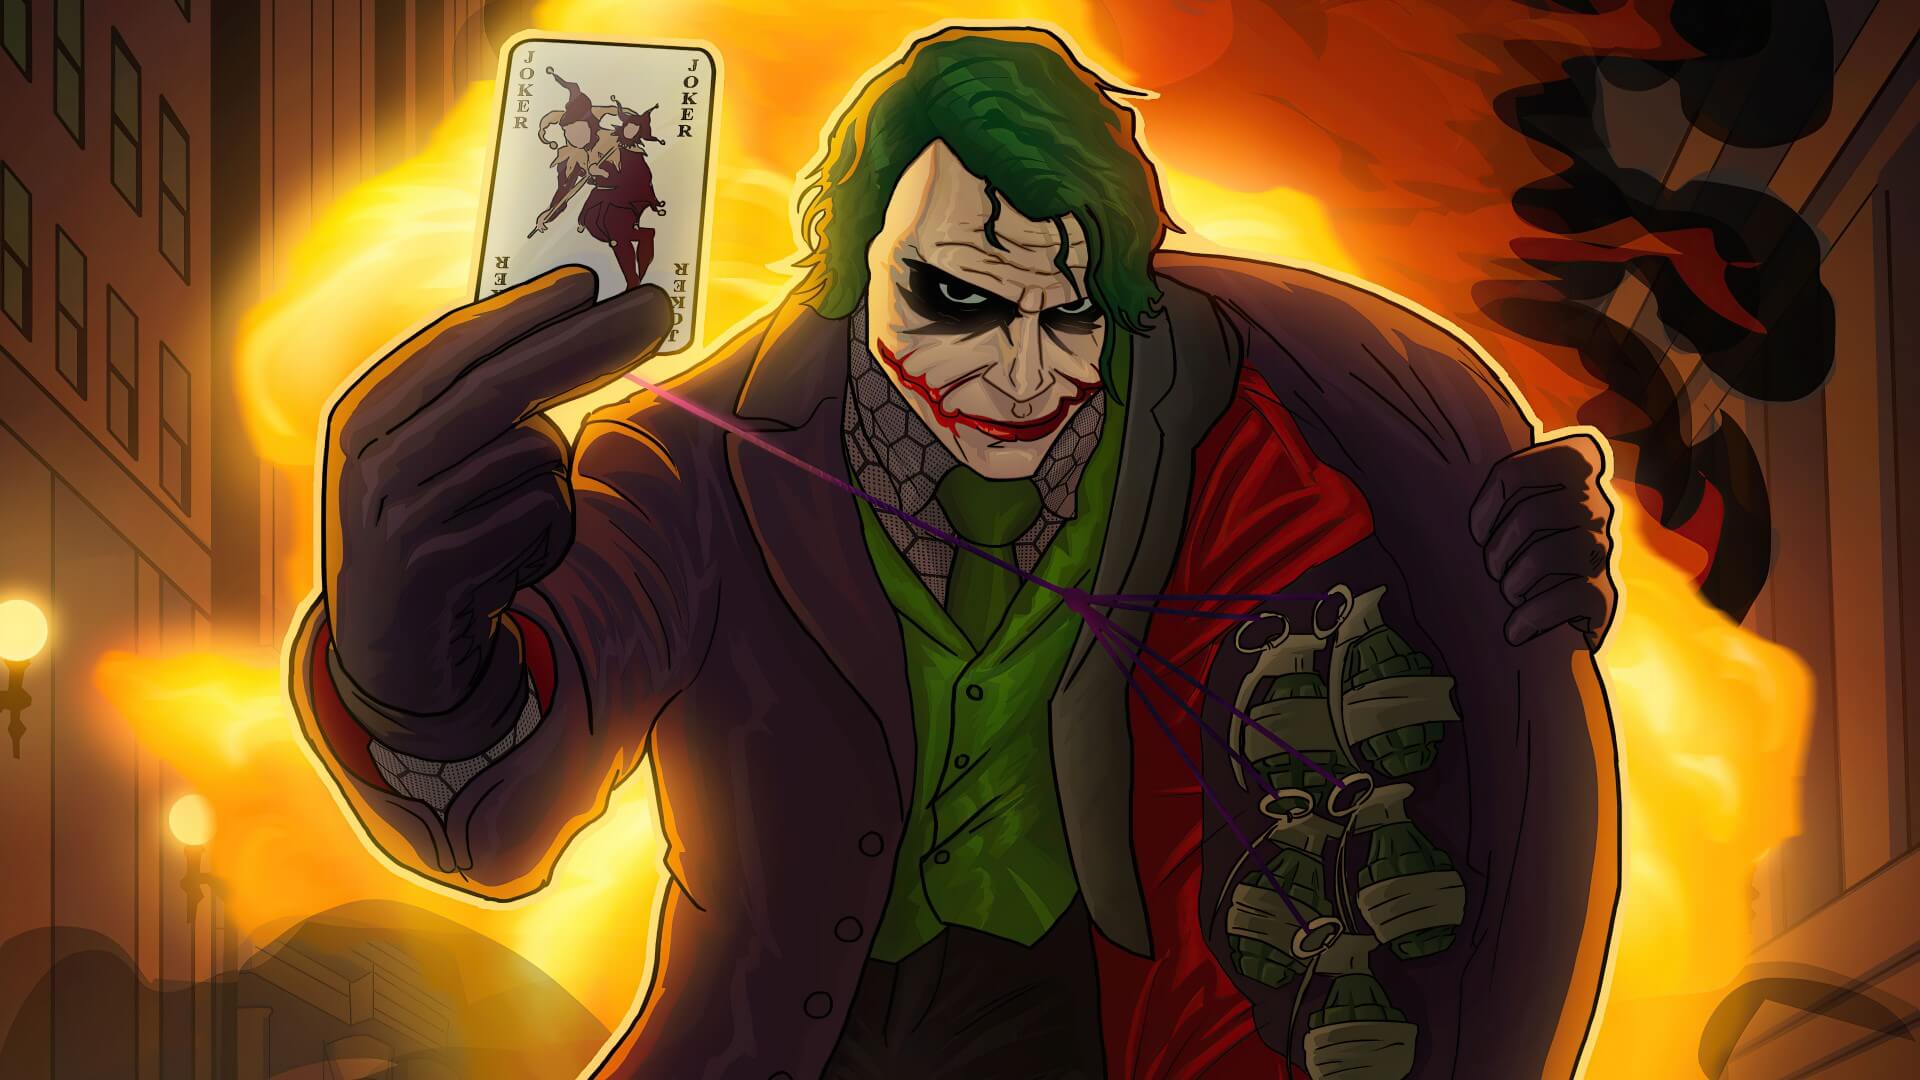 Hình nền anime Joker đẹp